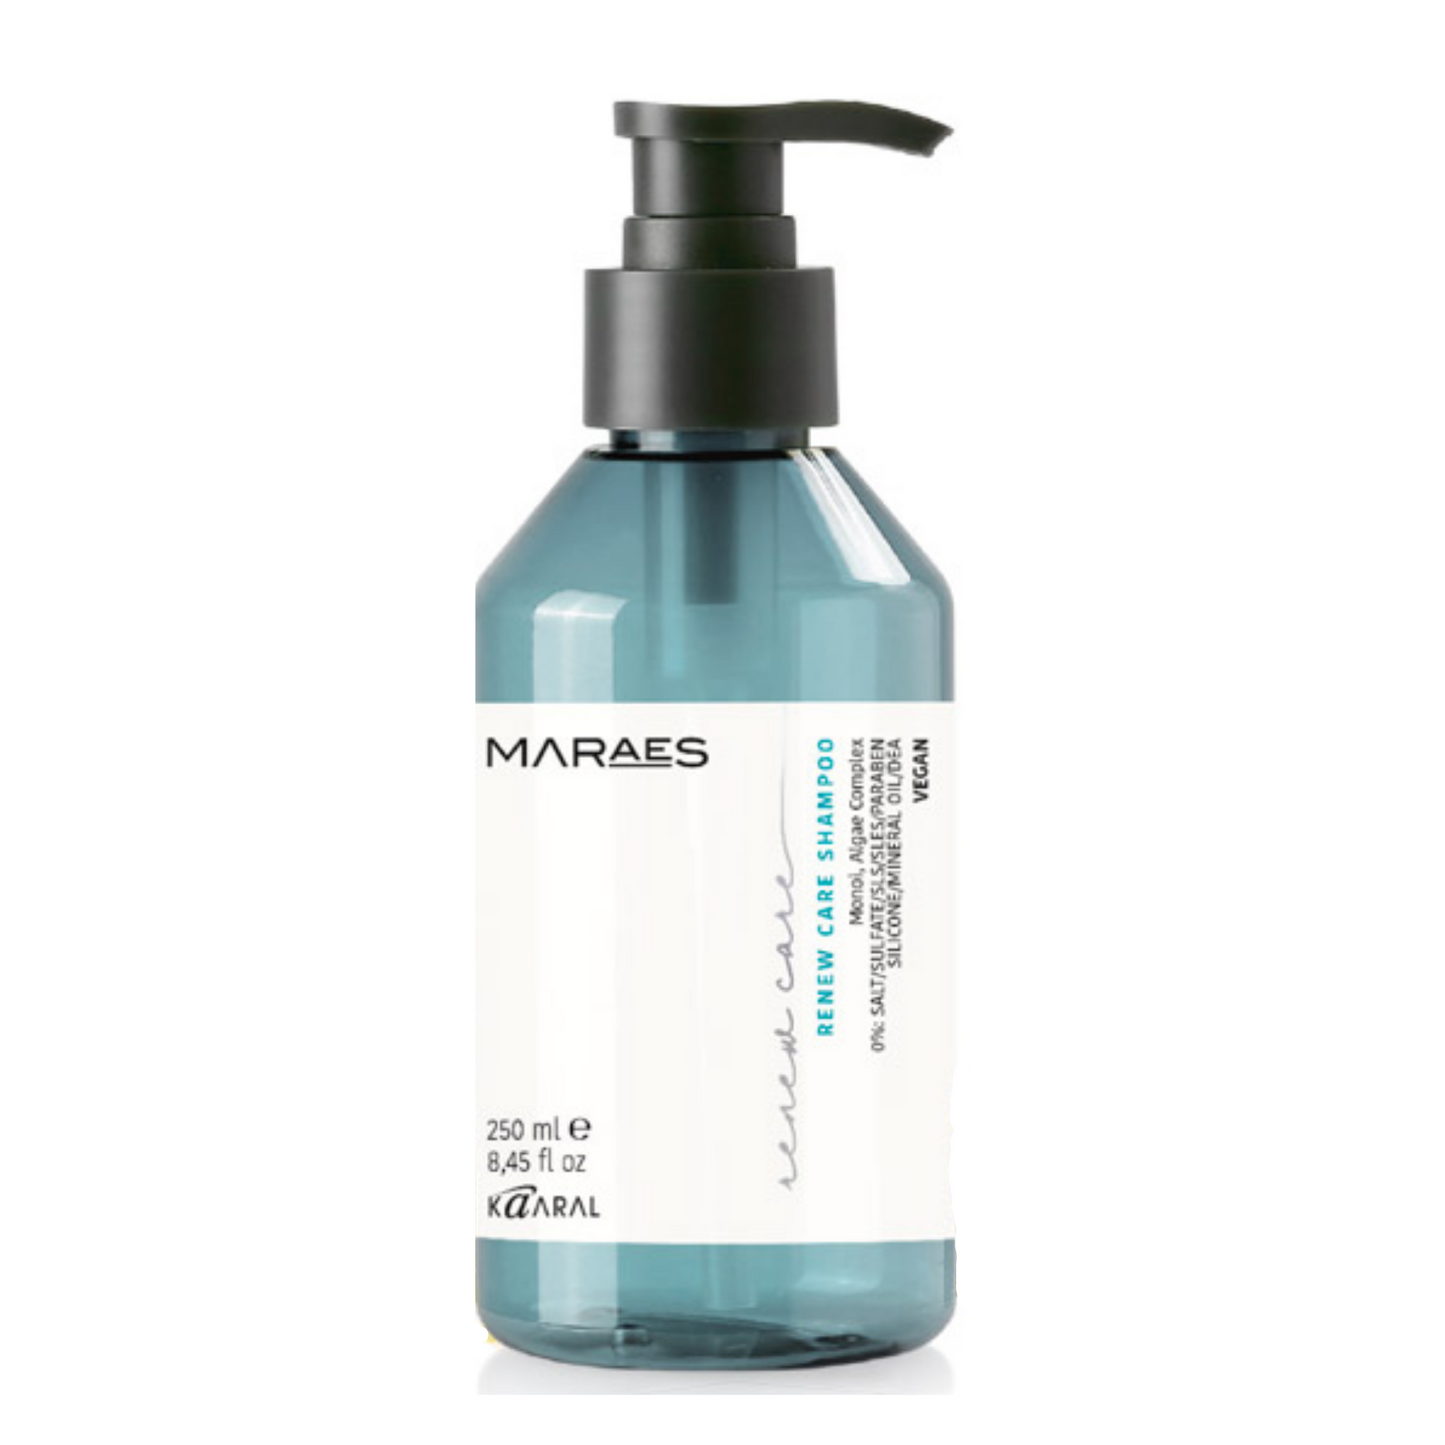 Kaaral Maraes Renew Care Shampoo